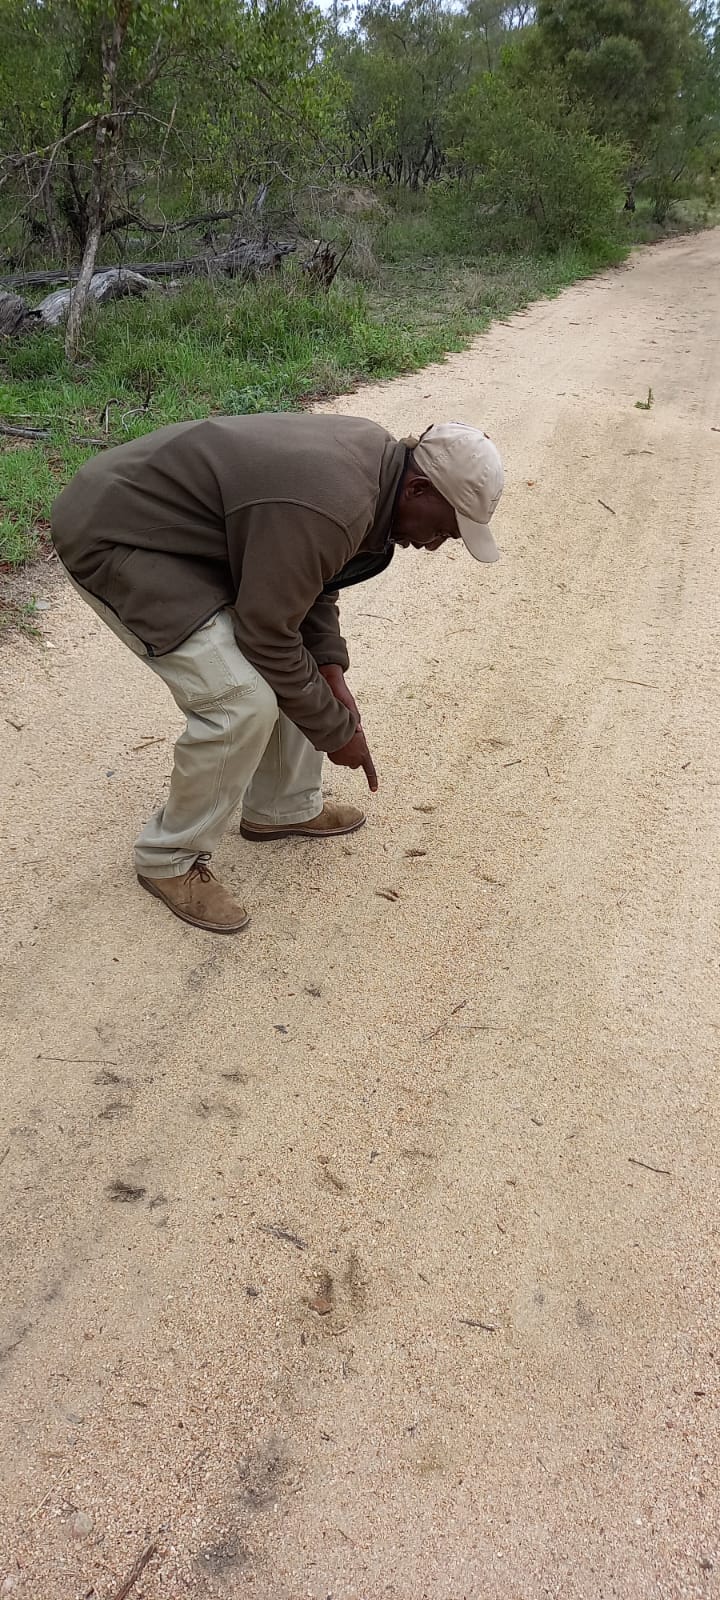 a-tracker-examining-animal-tracks-on-the-ground